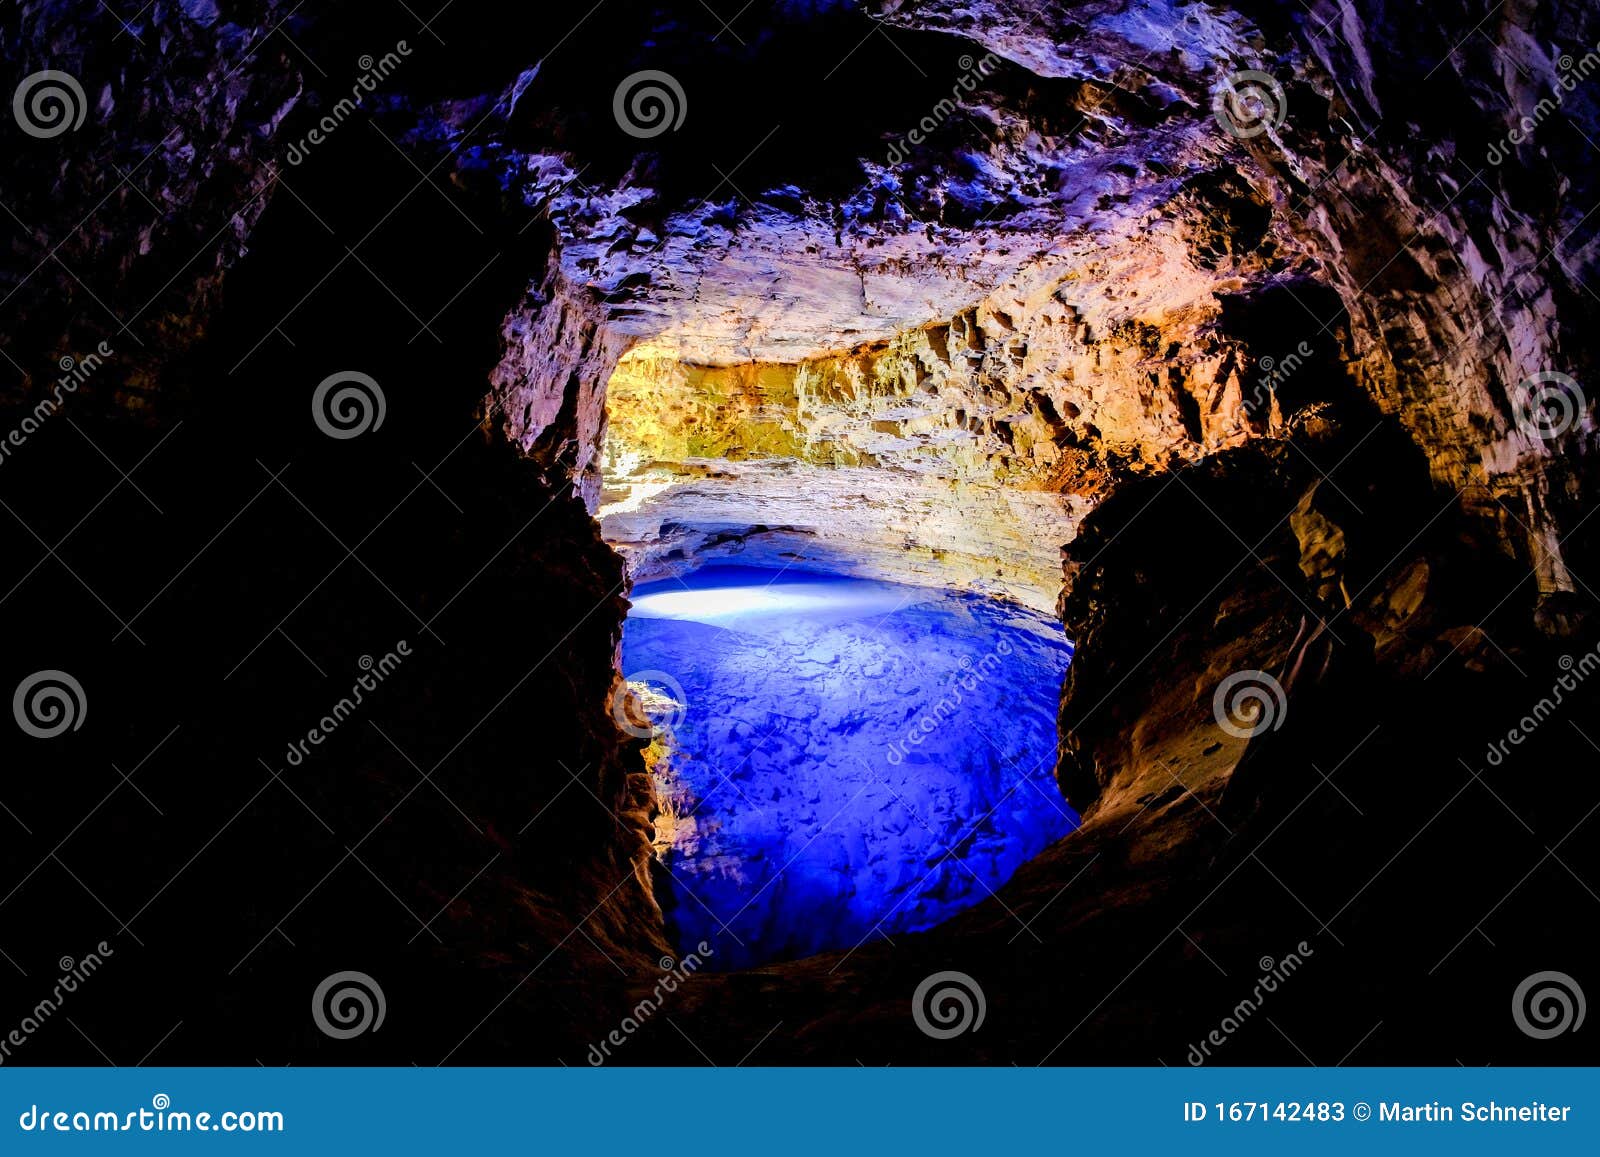 poco encantado, blue lagoon with sunrays inside a cavern in the chapada diamantina, andarai, bahia, brazil